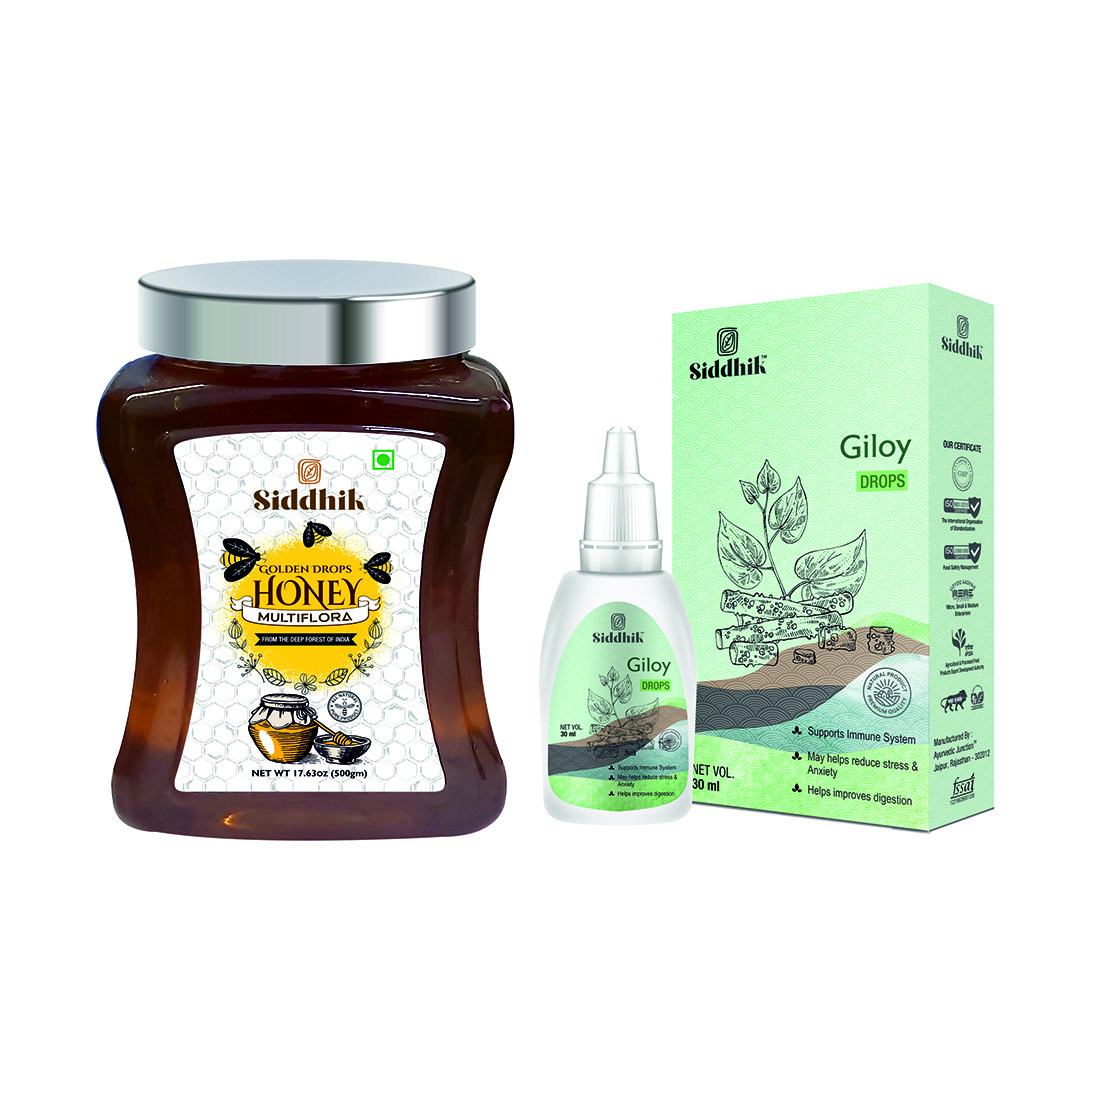 Siddhik Golden Drops Multiflora Honey 500 grams with Giloy Drops 30 ML